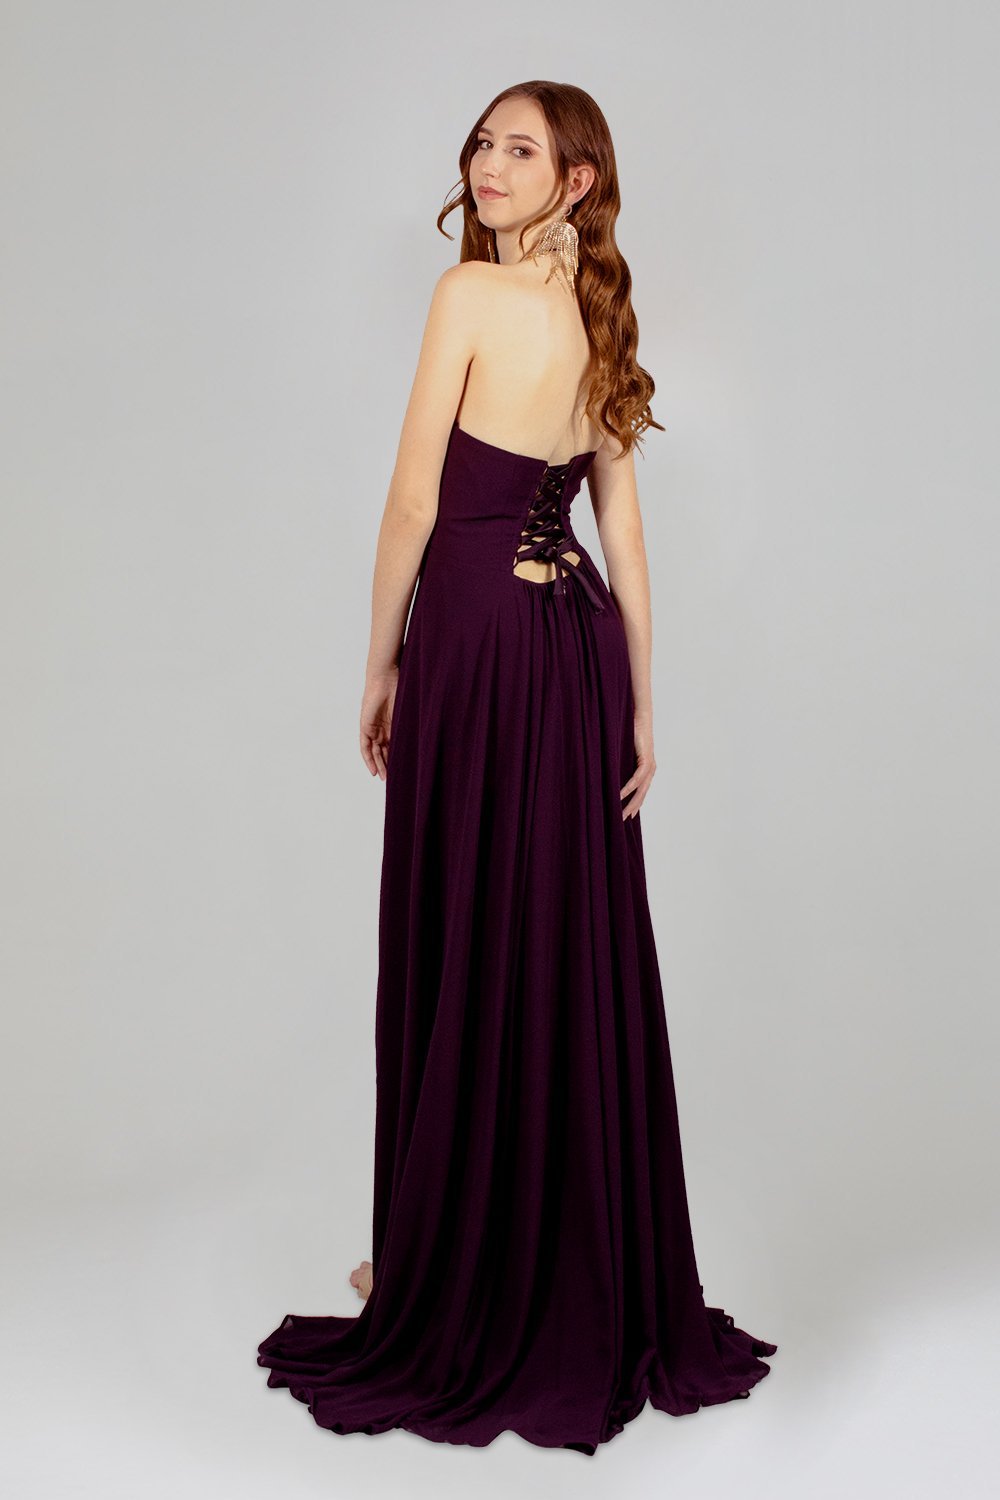 custom made to order bridesmaid dresses perth australia online envious bridal & formal